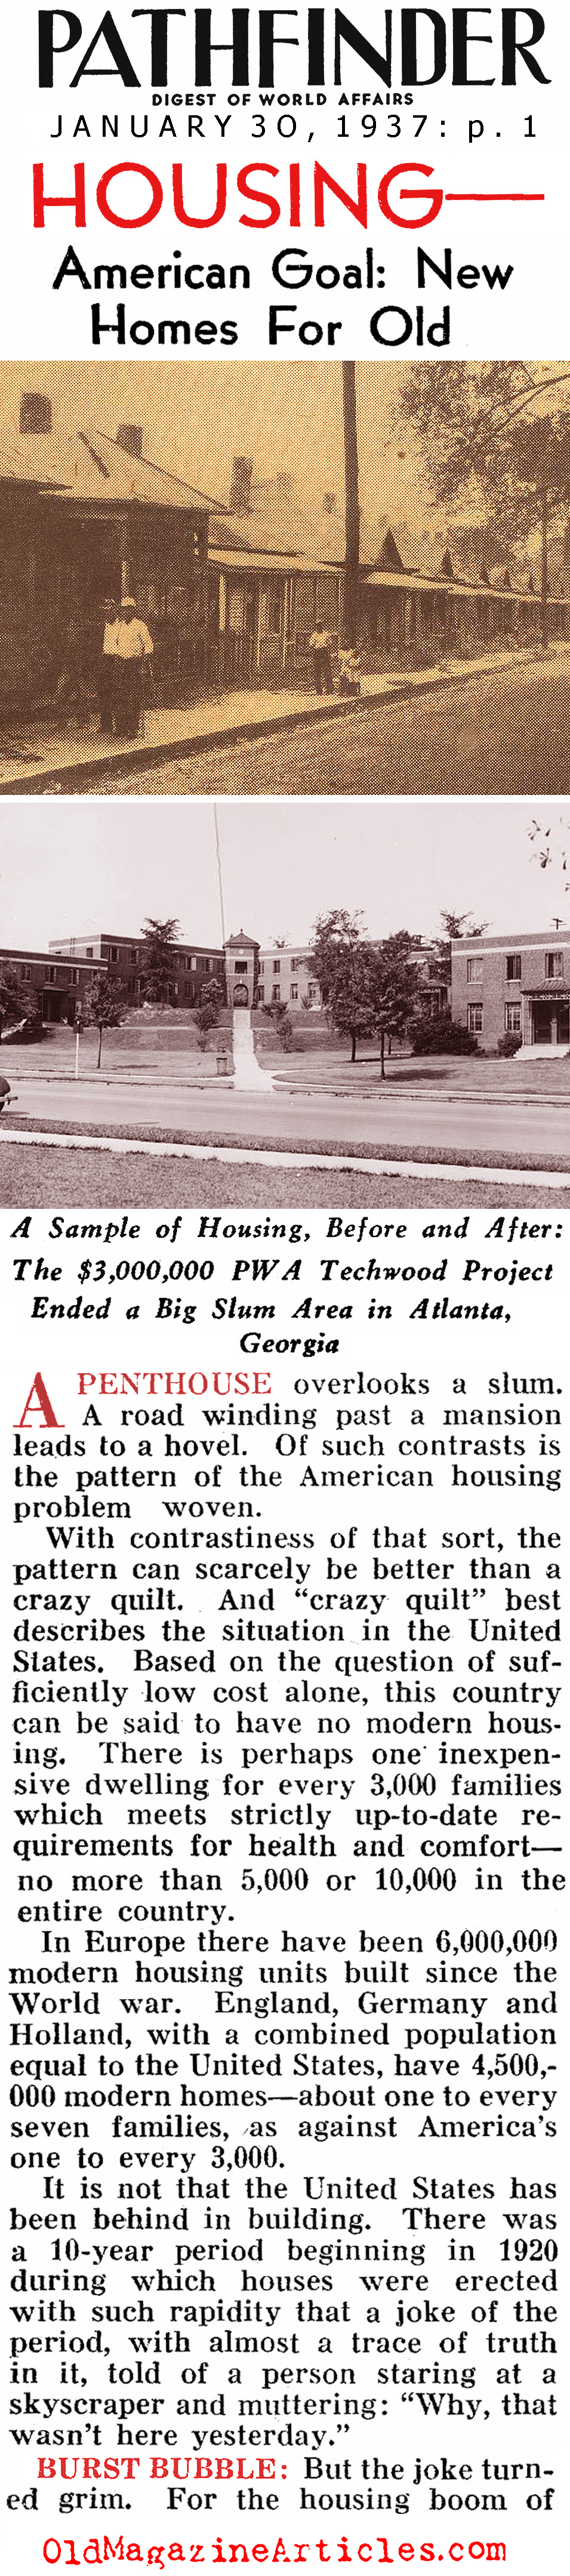 Federal Housing (Pathfinder Magazine, 1937)